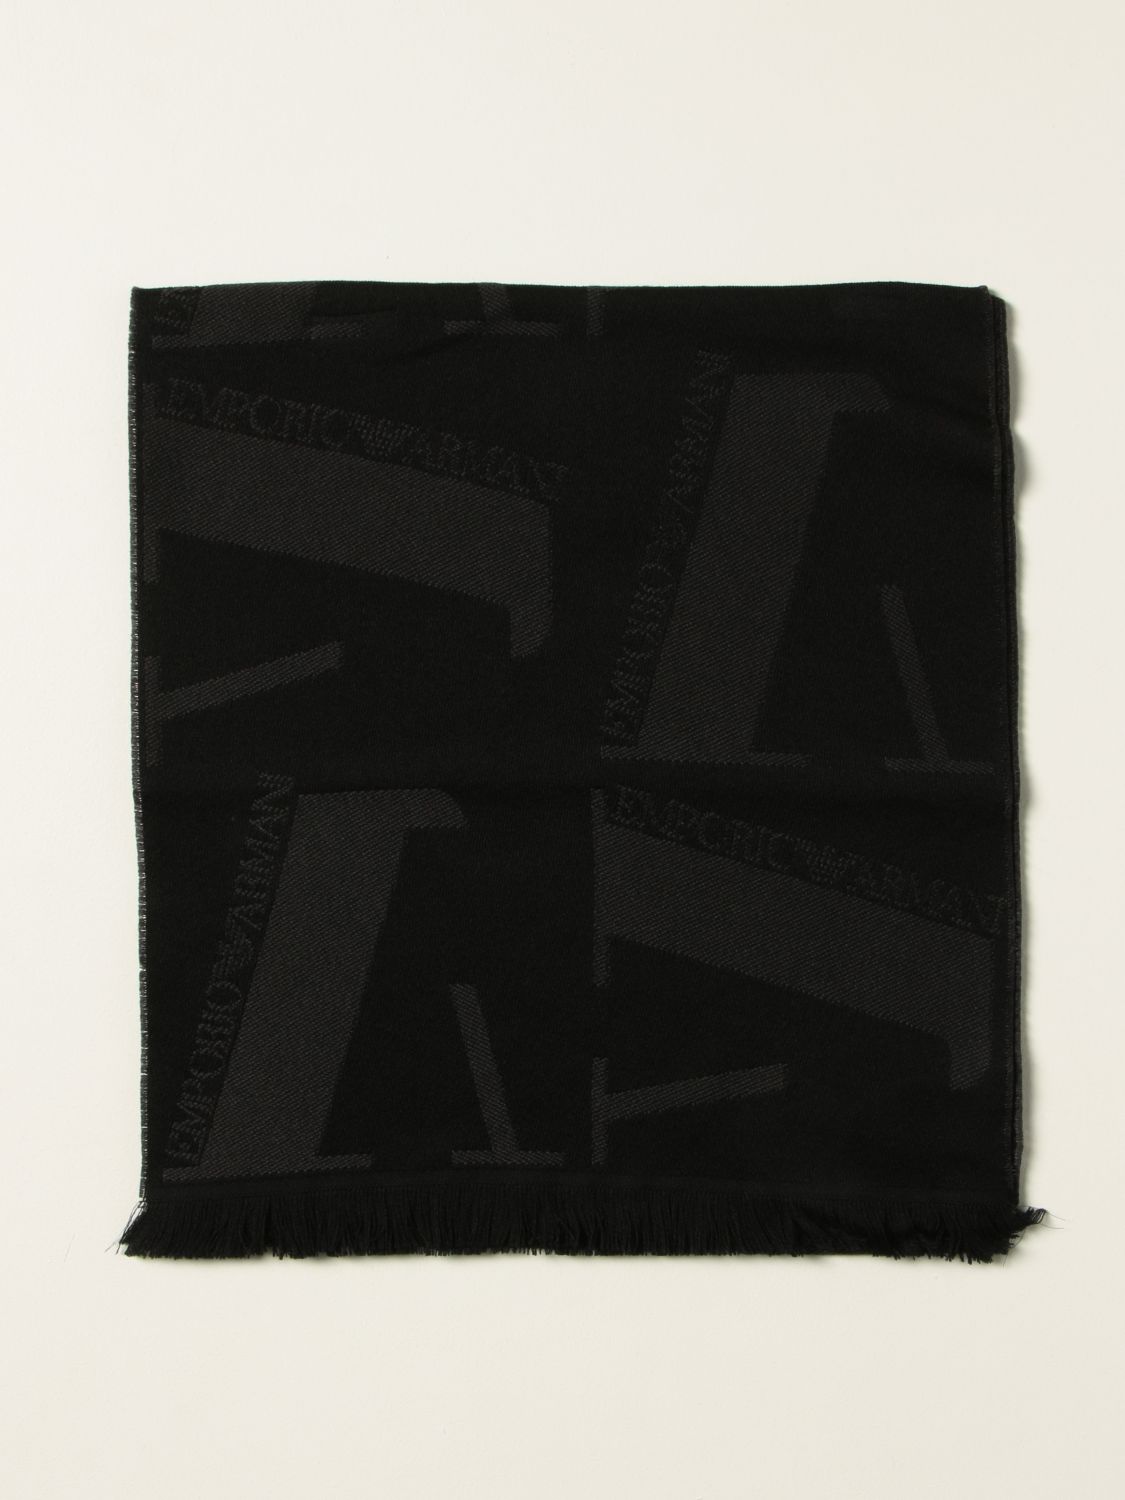 EMPORIO ARMANI: wool scarf with logo - Black | Emporio Armani scarf ...